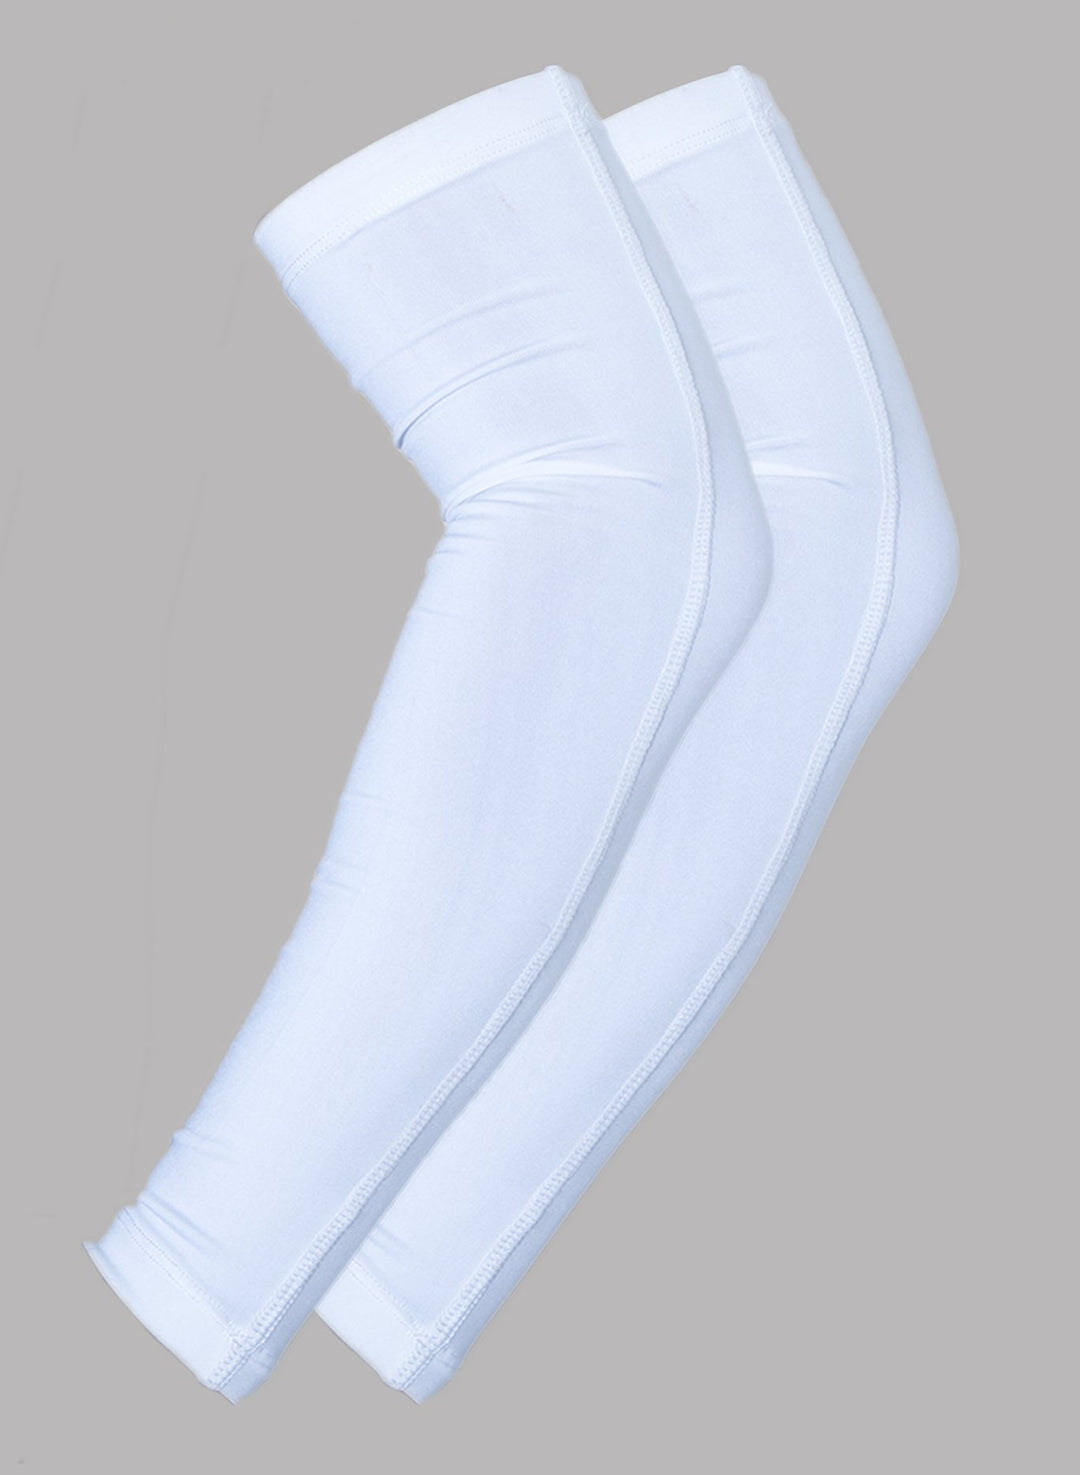 Sports Arm Sleeve - White - TRUEREVO